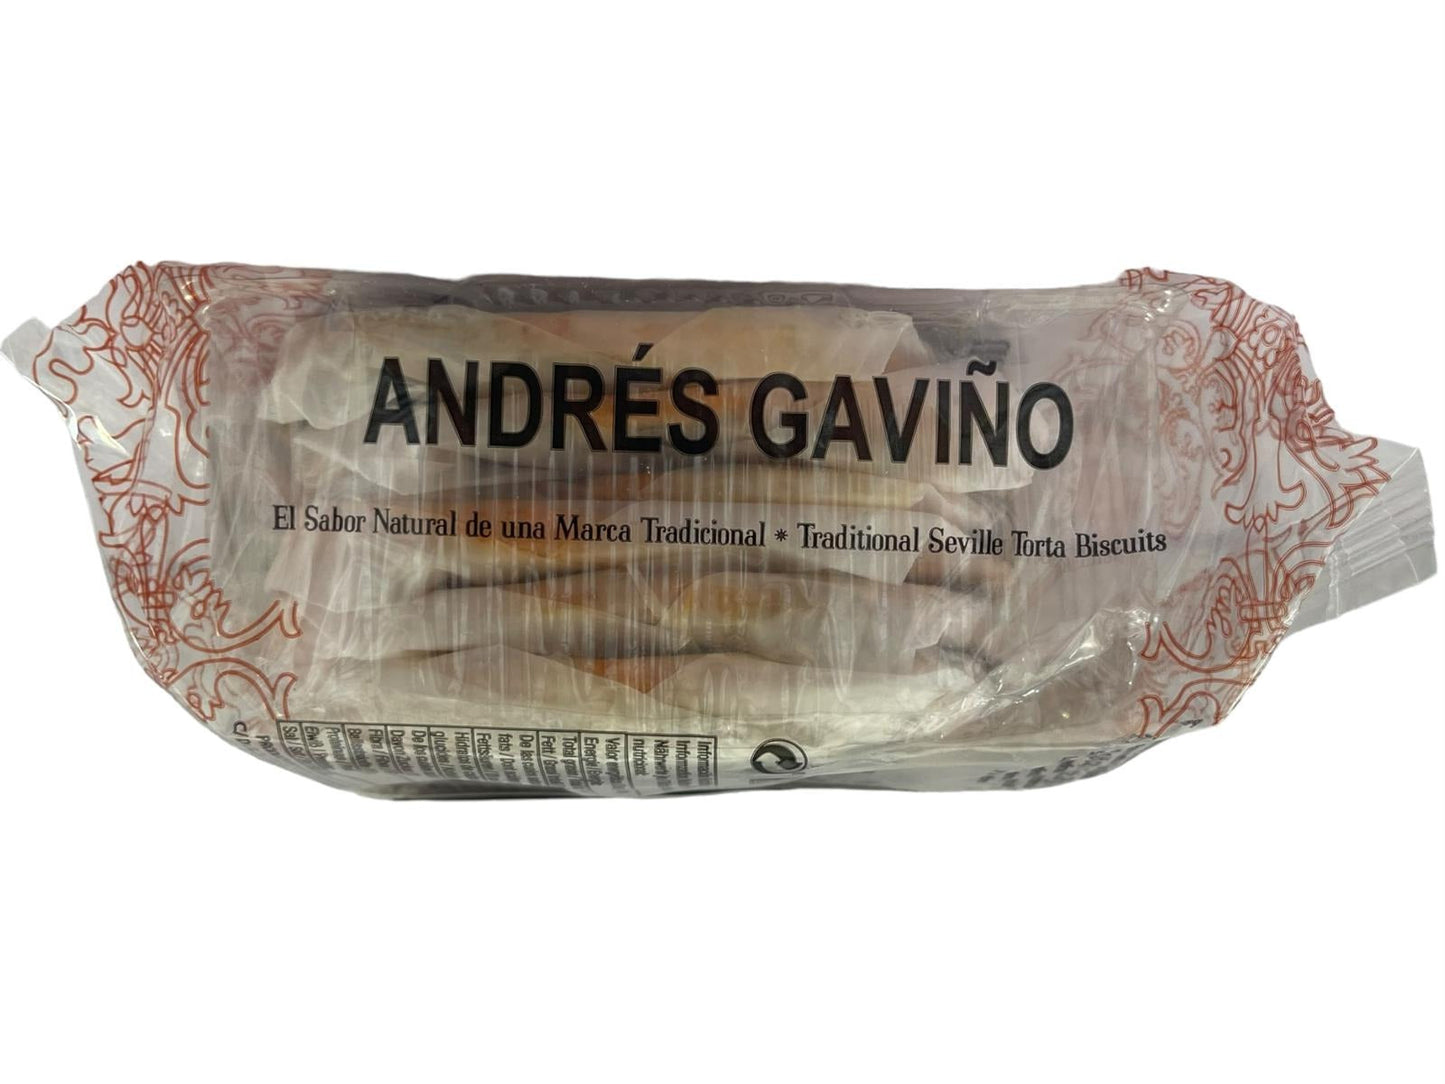 Andres Gavino Spanish Smoked Paprika Tortas 170g Twin Pack 340g Total